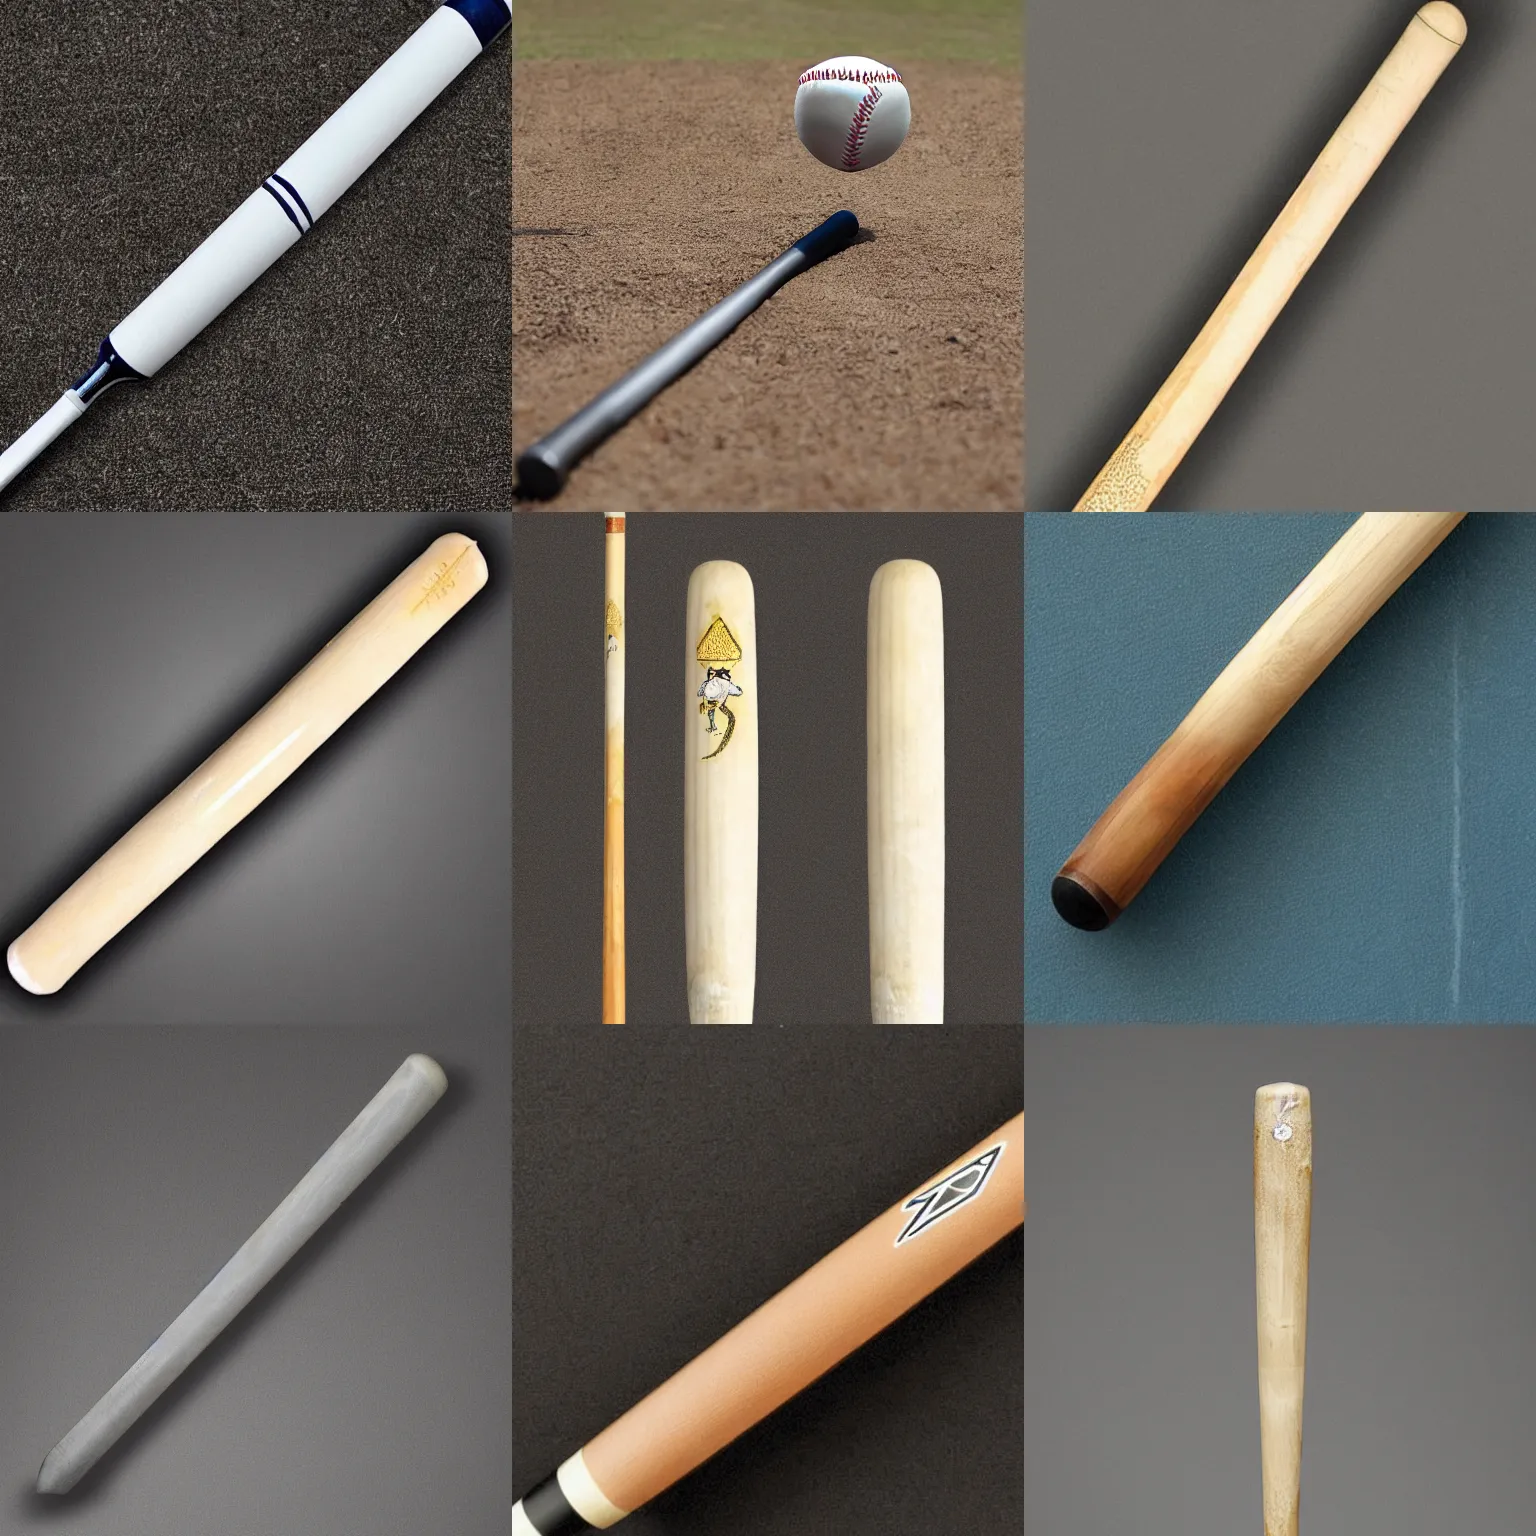 Prompt: a diamond baseball bat